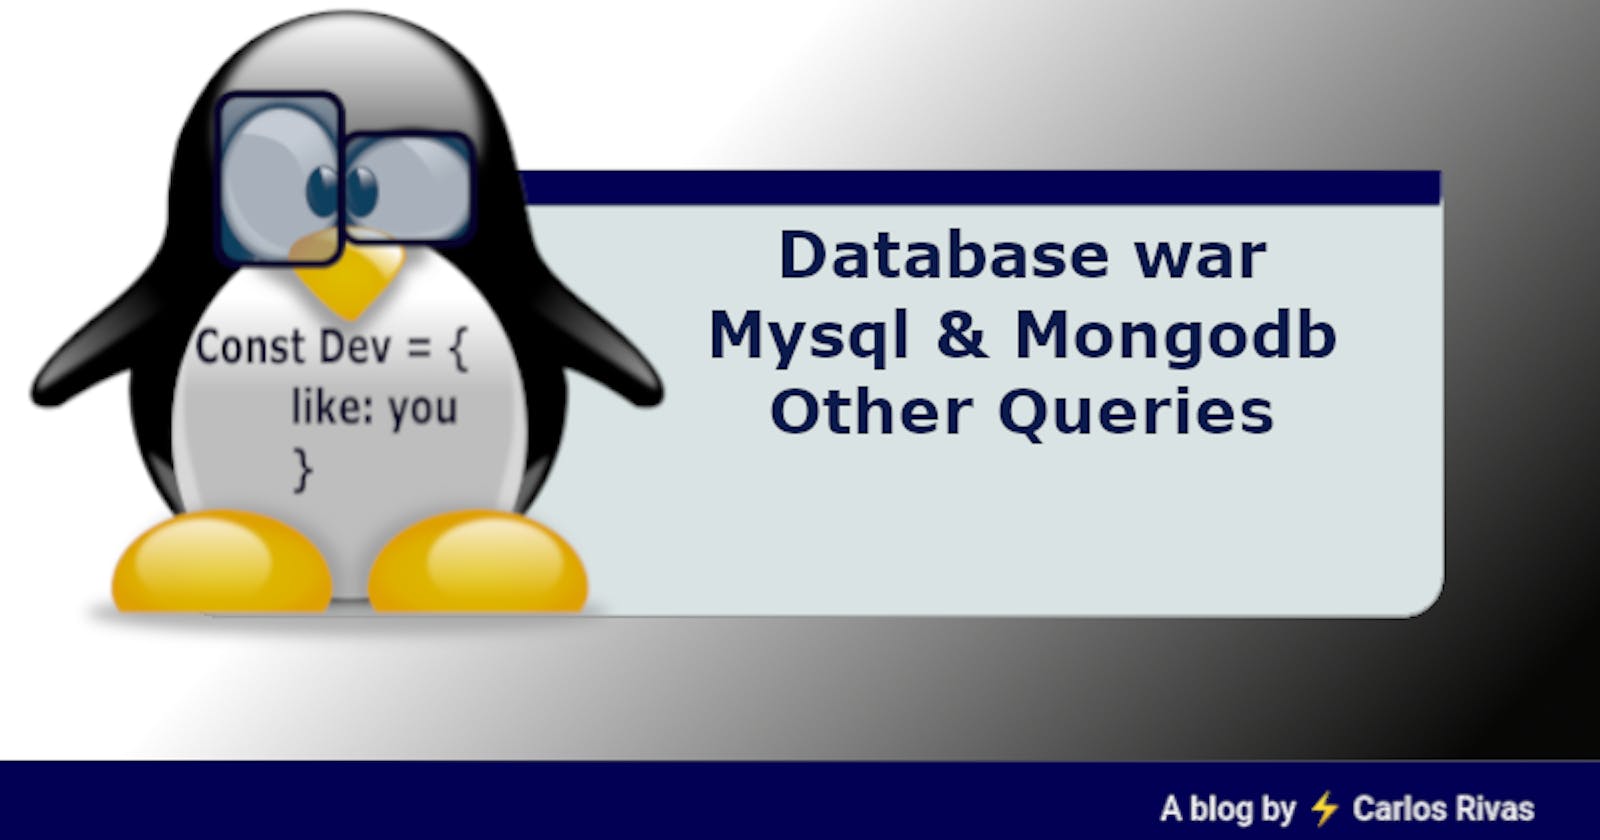 Database war
Mysql & Mongodb
Other Queries